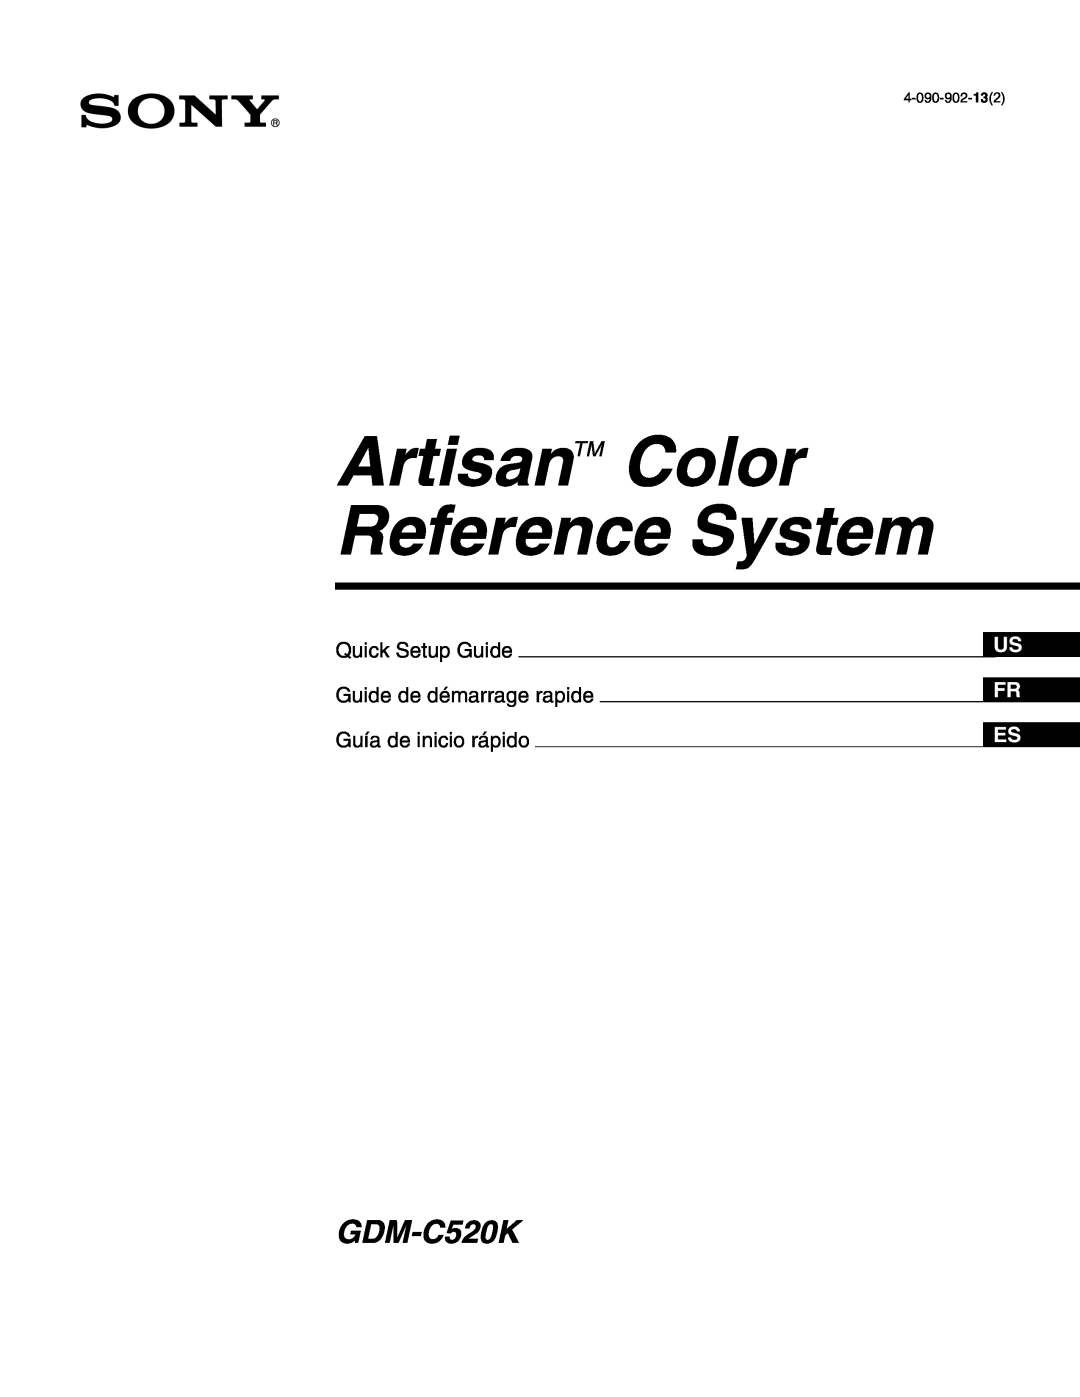 Sony GDM-C250K setup guide ArtisanTM Color Reference System, GDM-C520K, Quick Setup Guide, Guide de démarrage rapide 